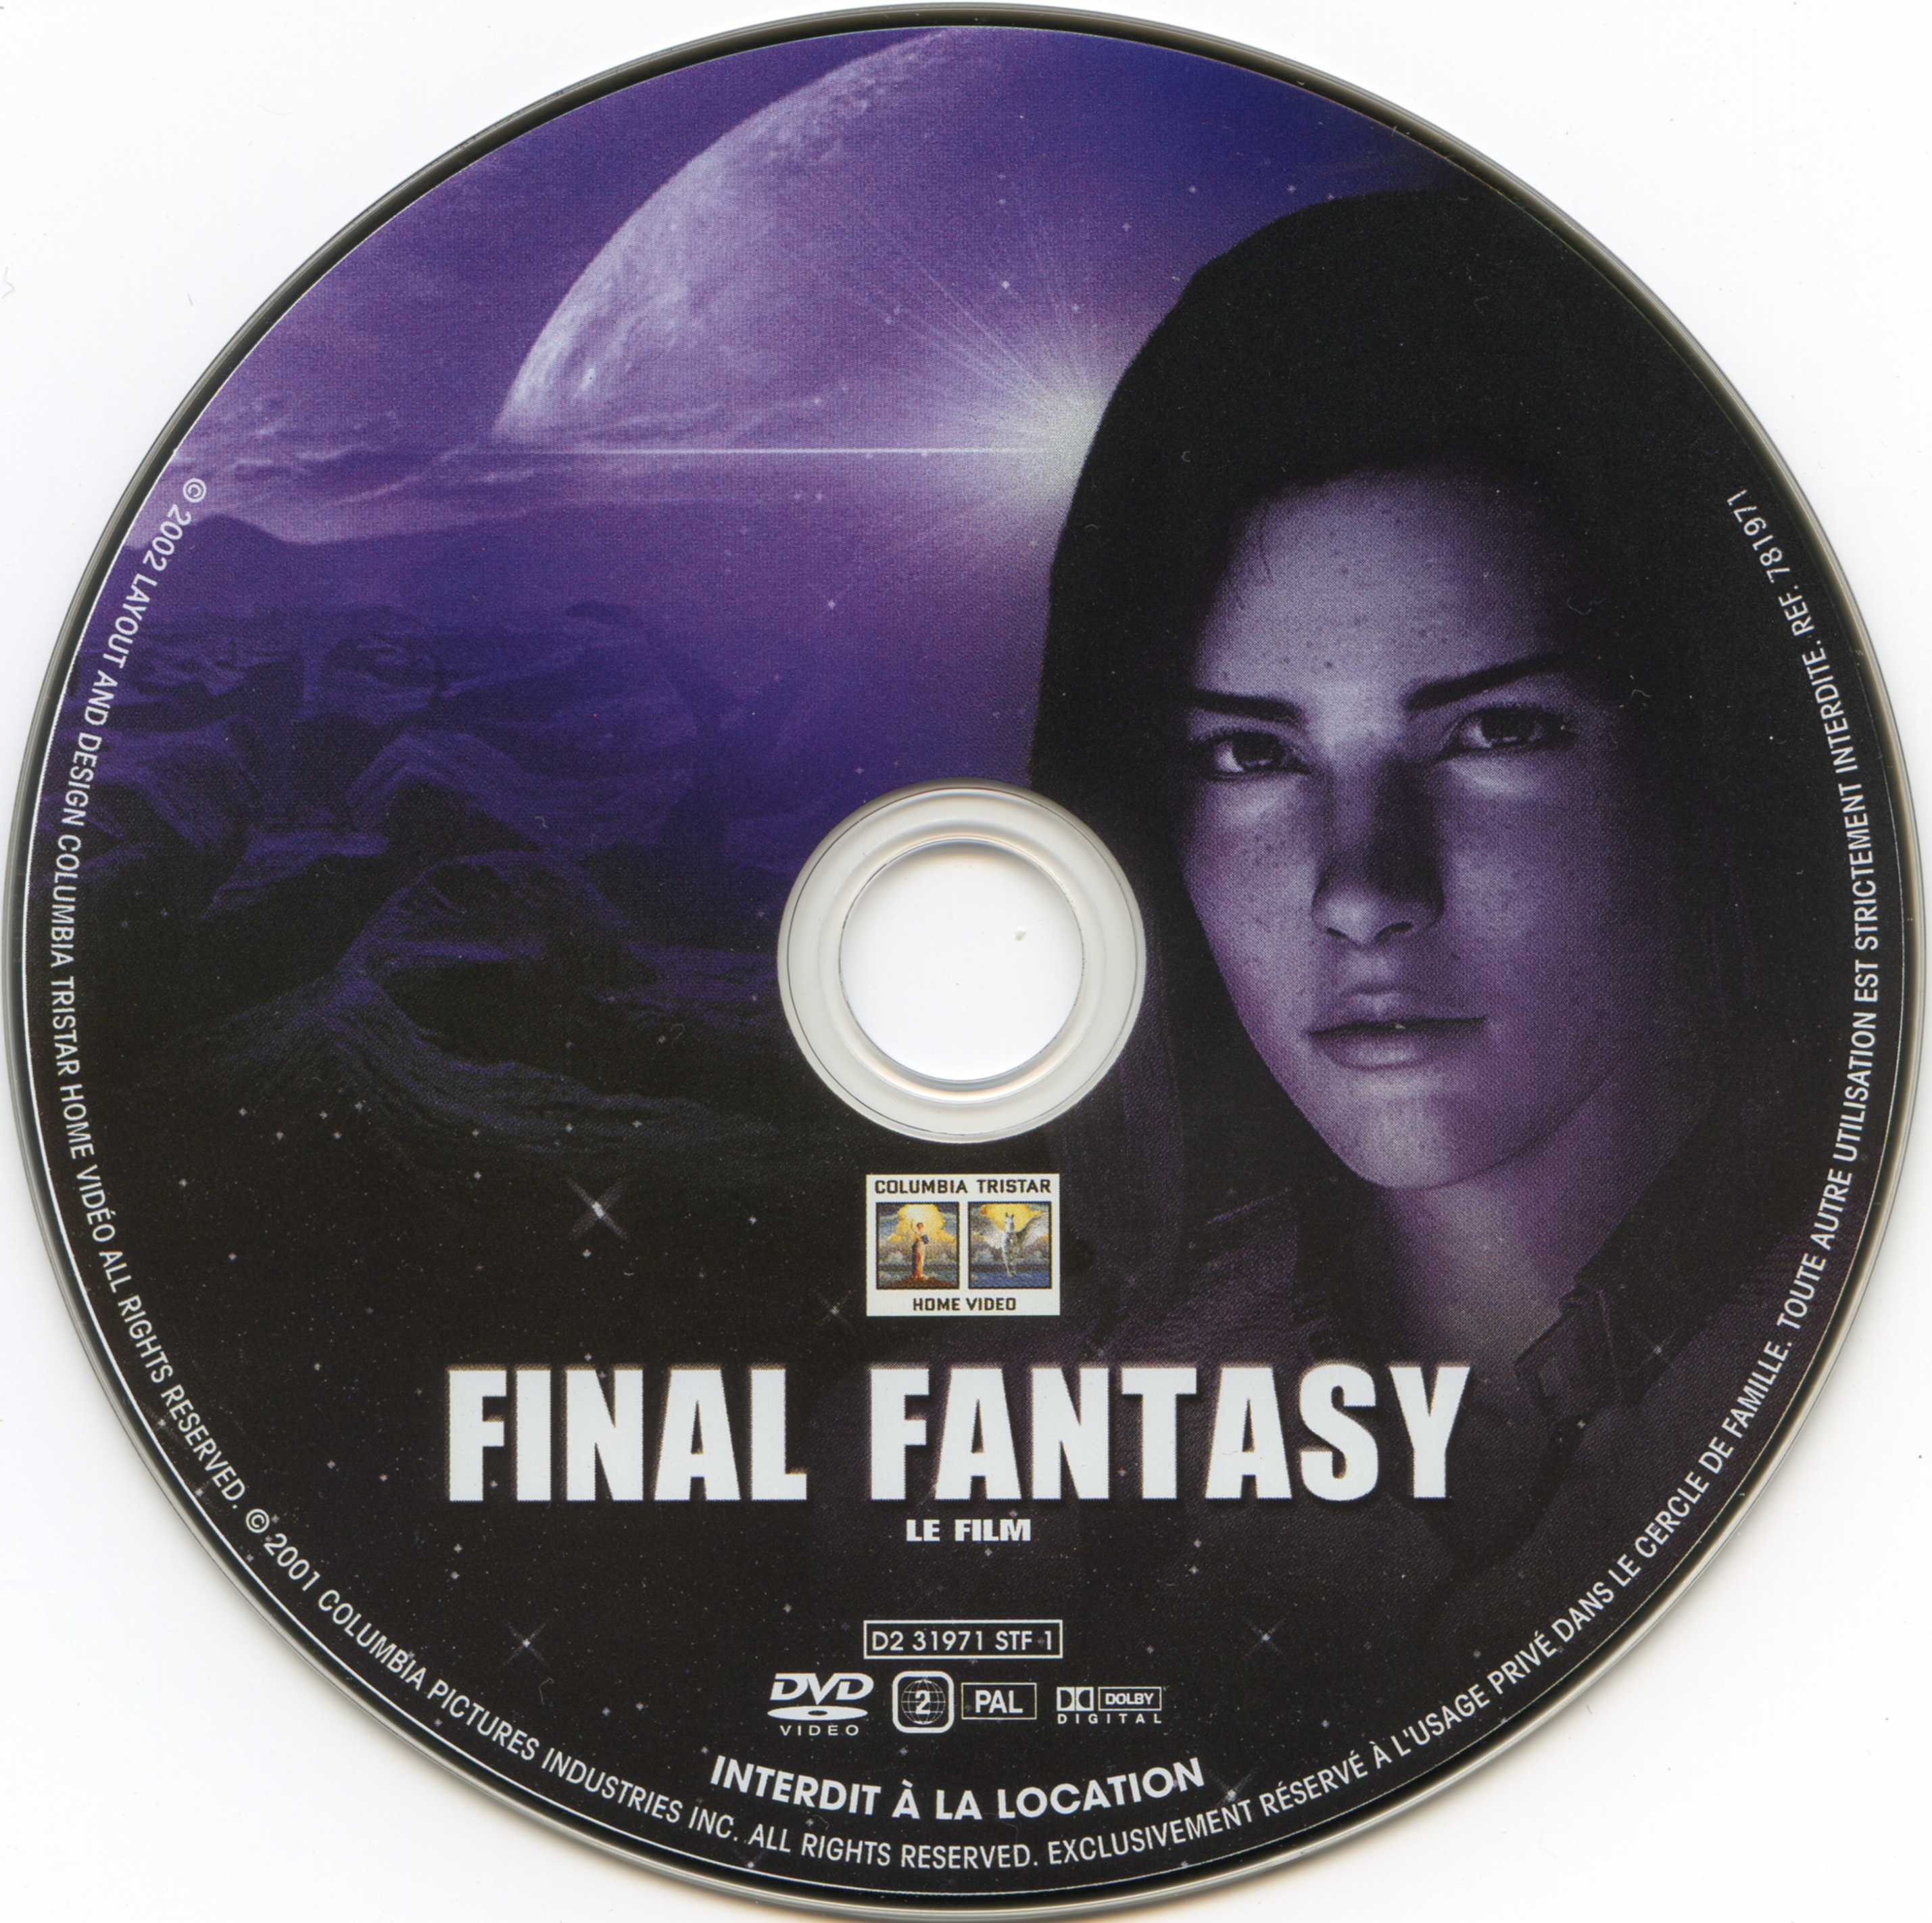 Final fantasy DISC 1